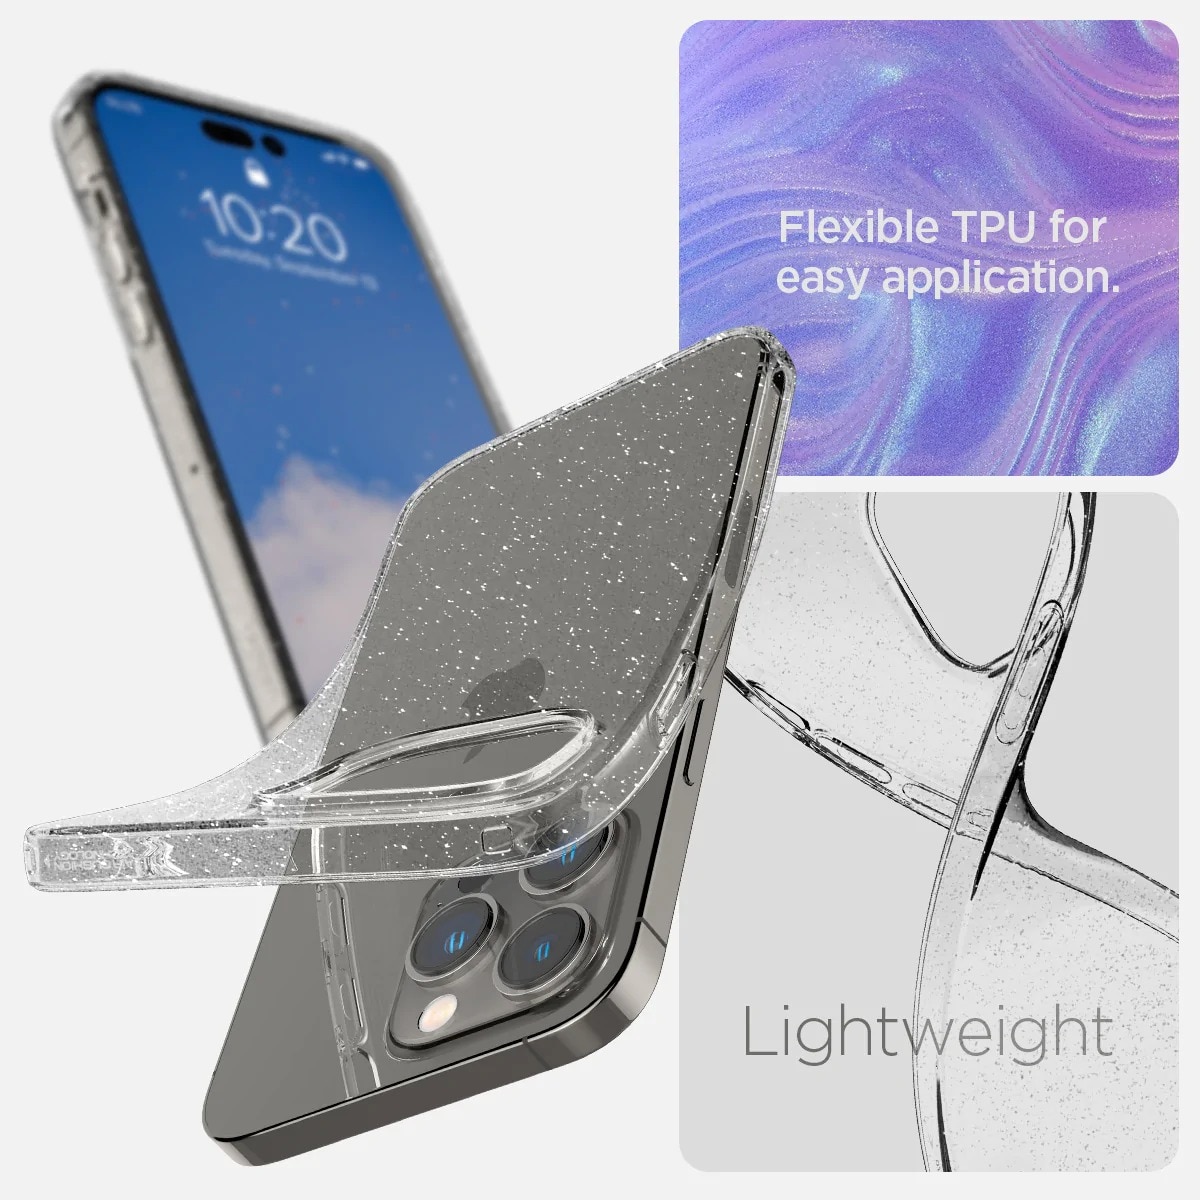 Case Liquid Crystal iPhone 14 Pro Glitter Crystal